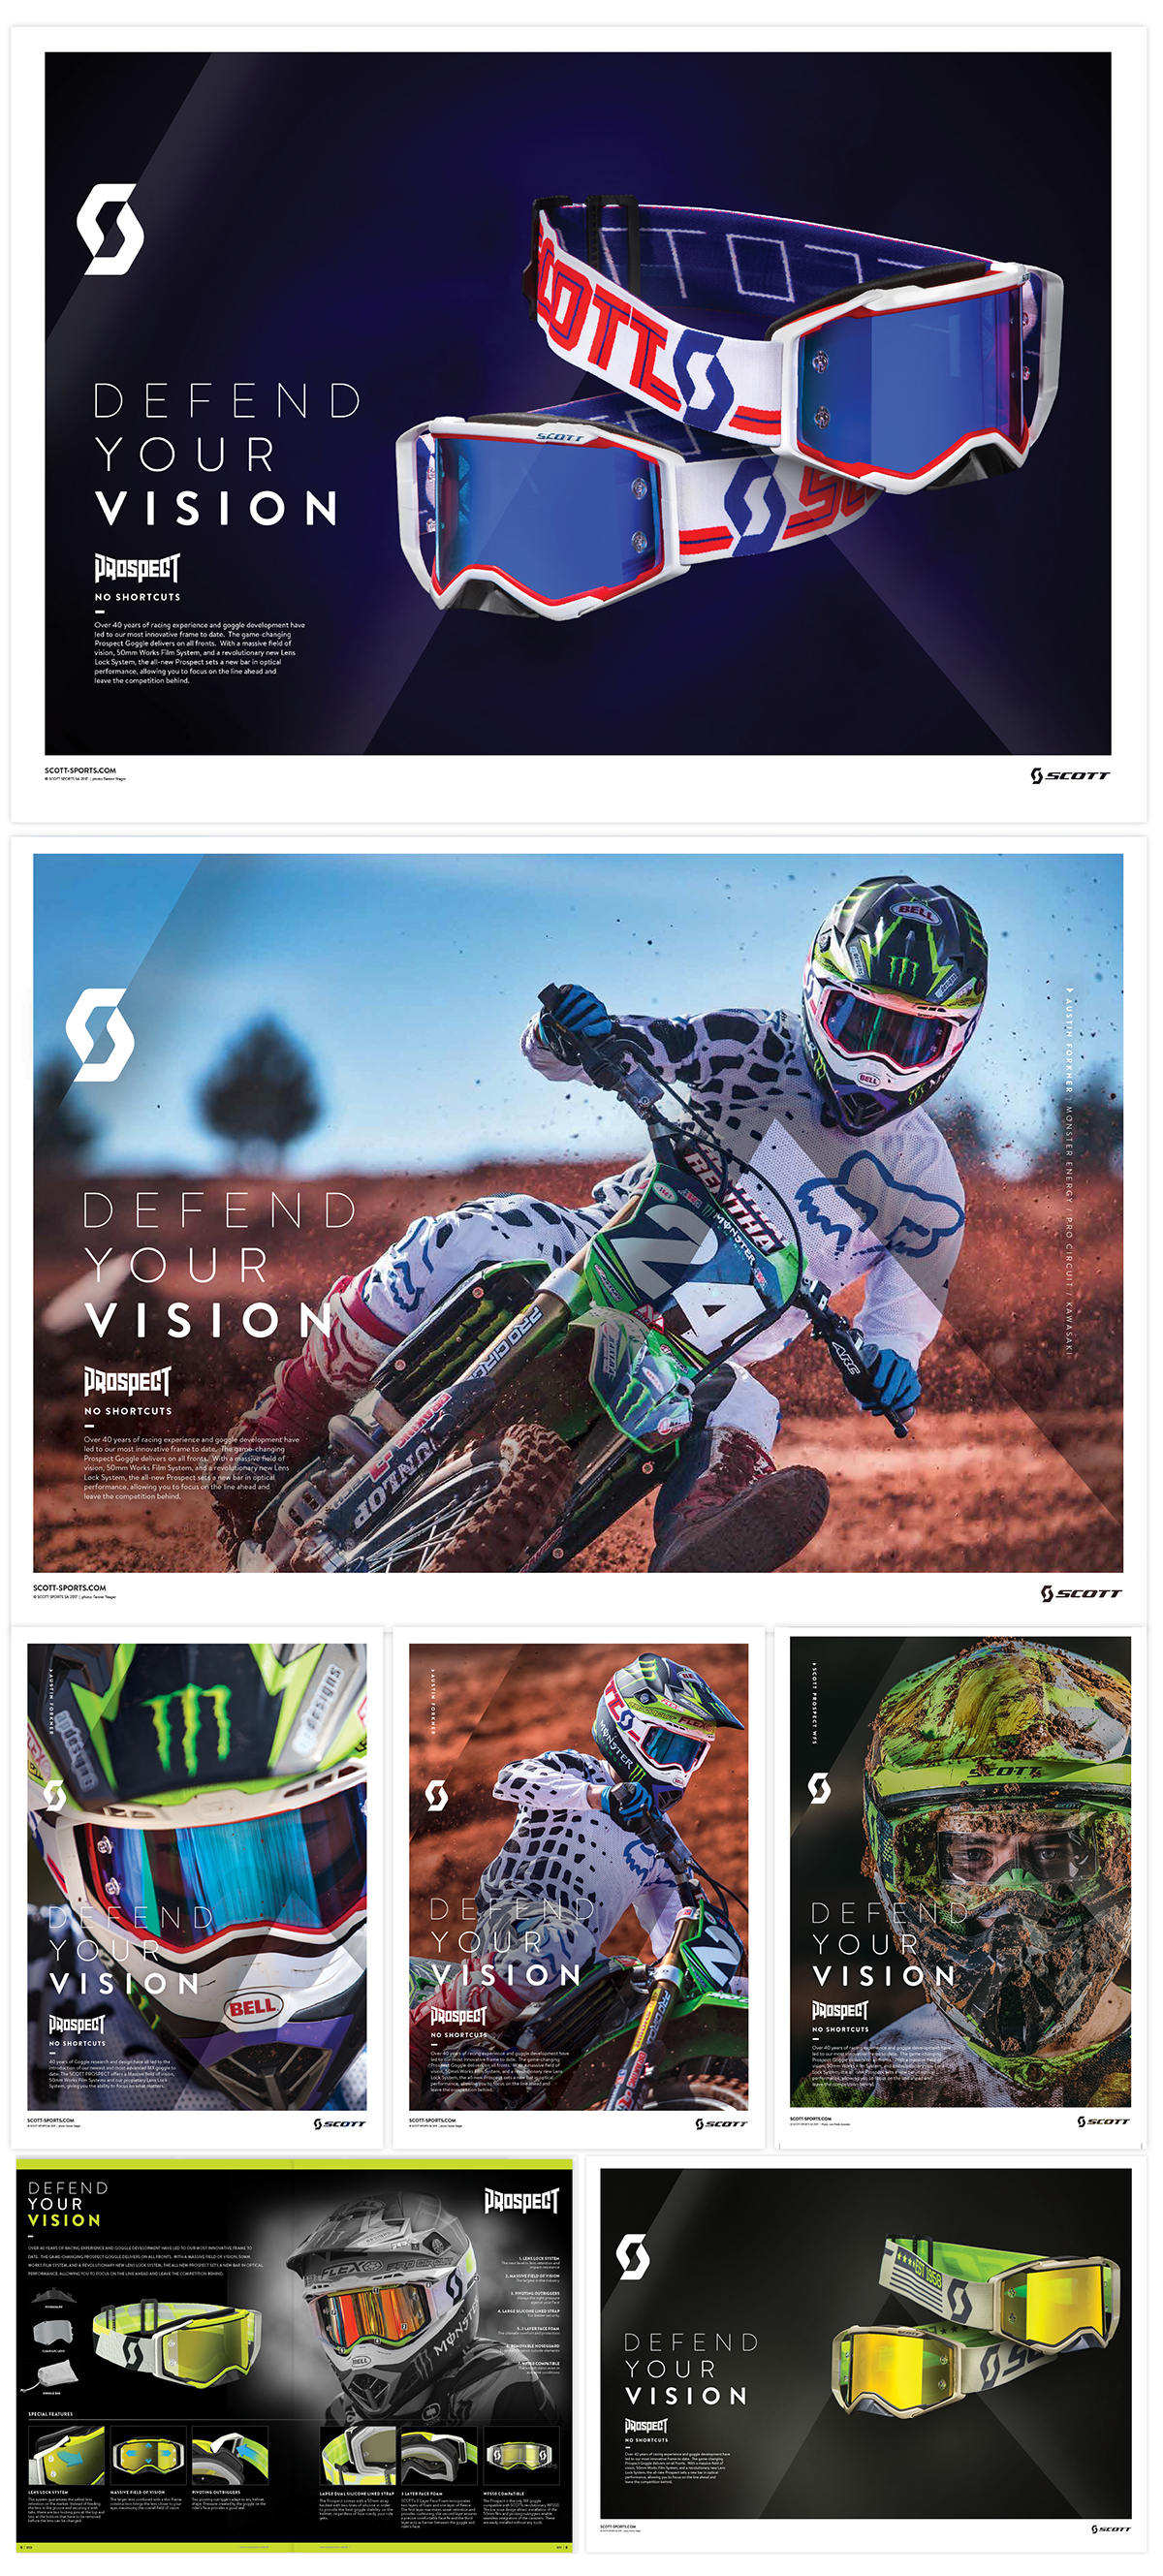 Adobe Portfolio motorcycle adventure Offroad action sports Sportswear eyewear goggles